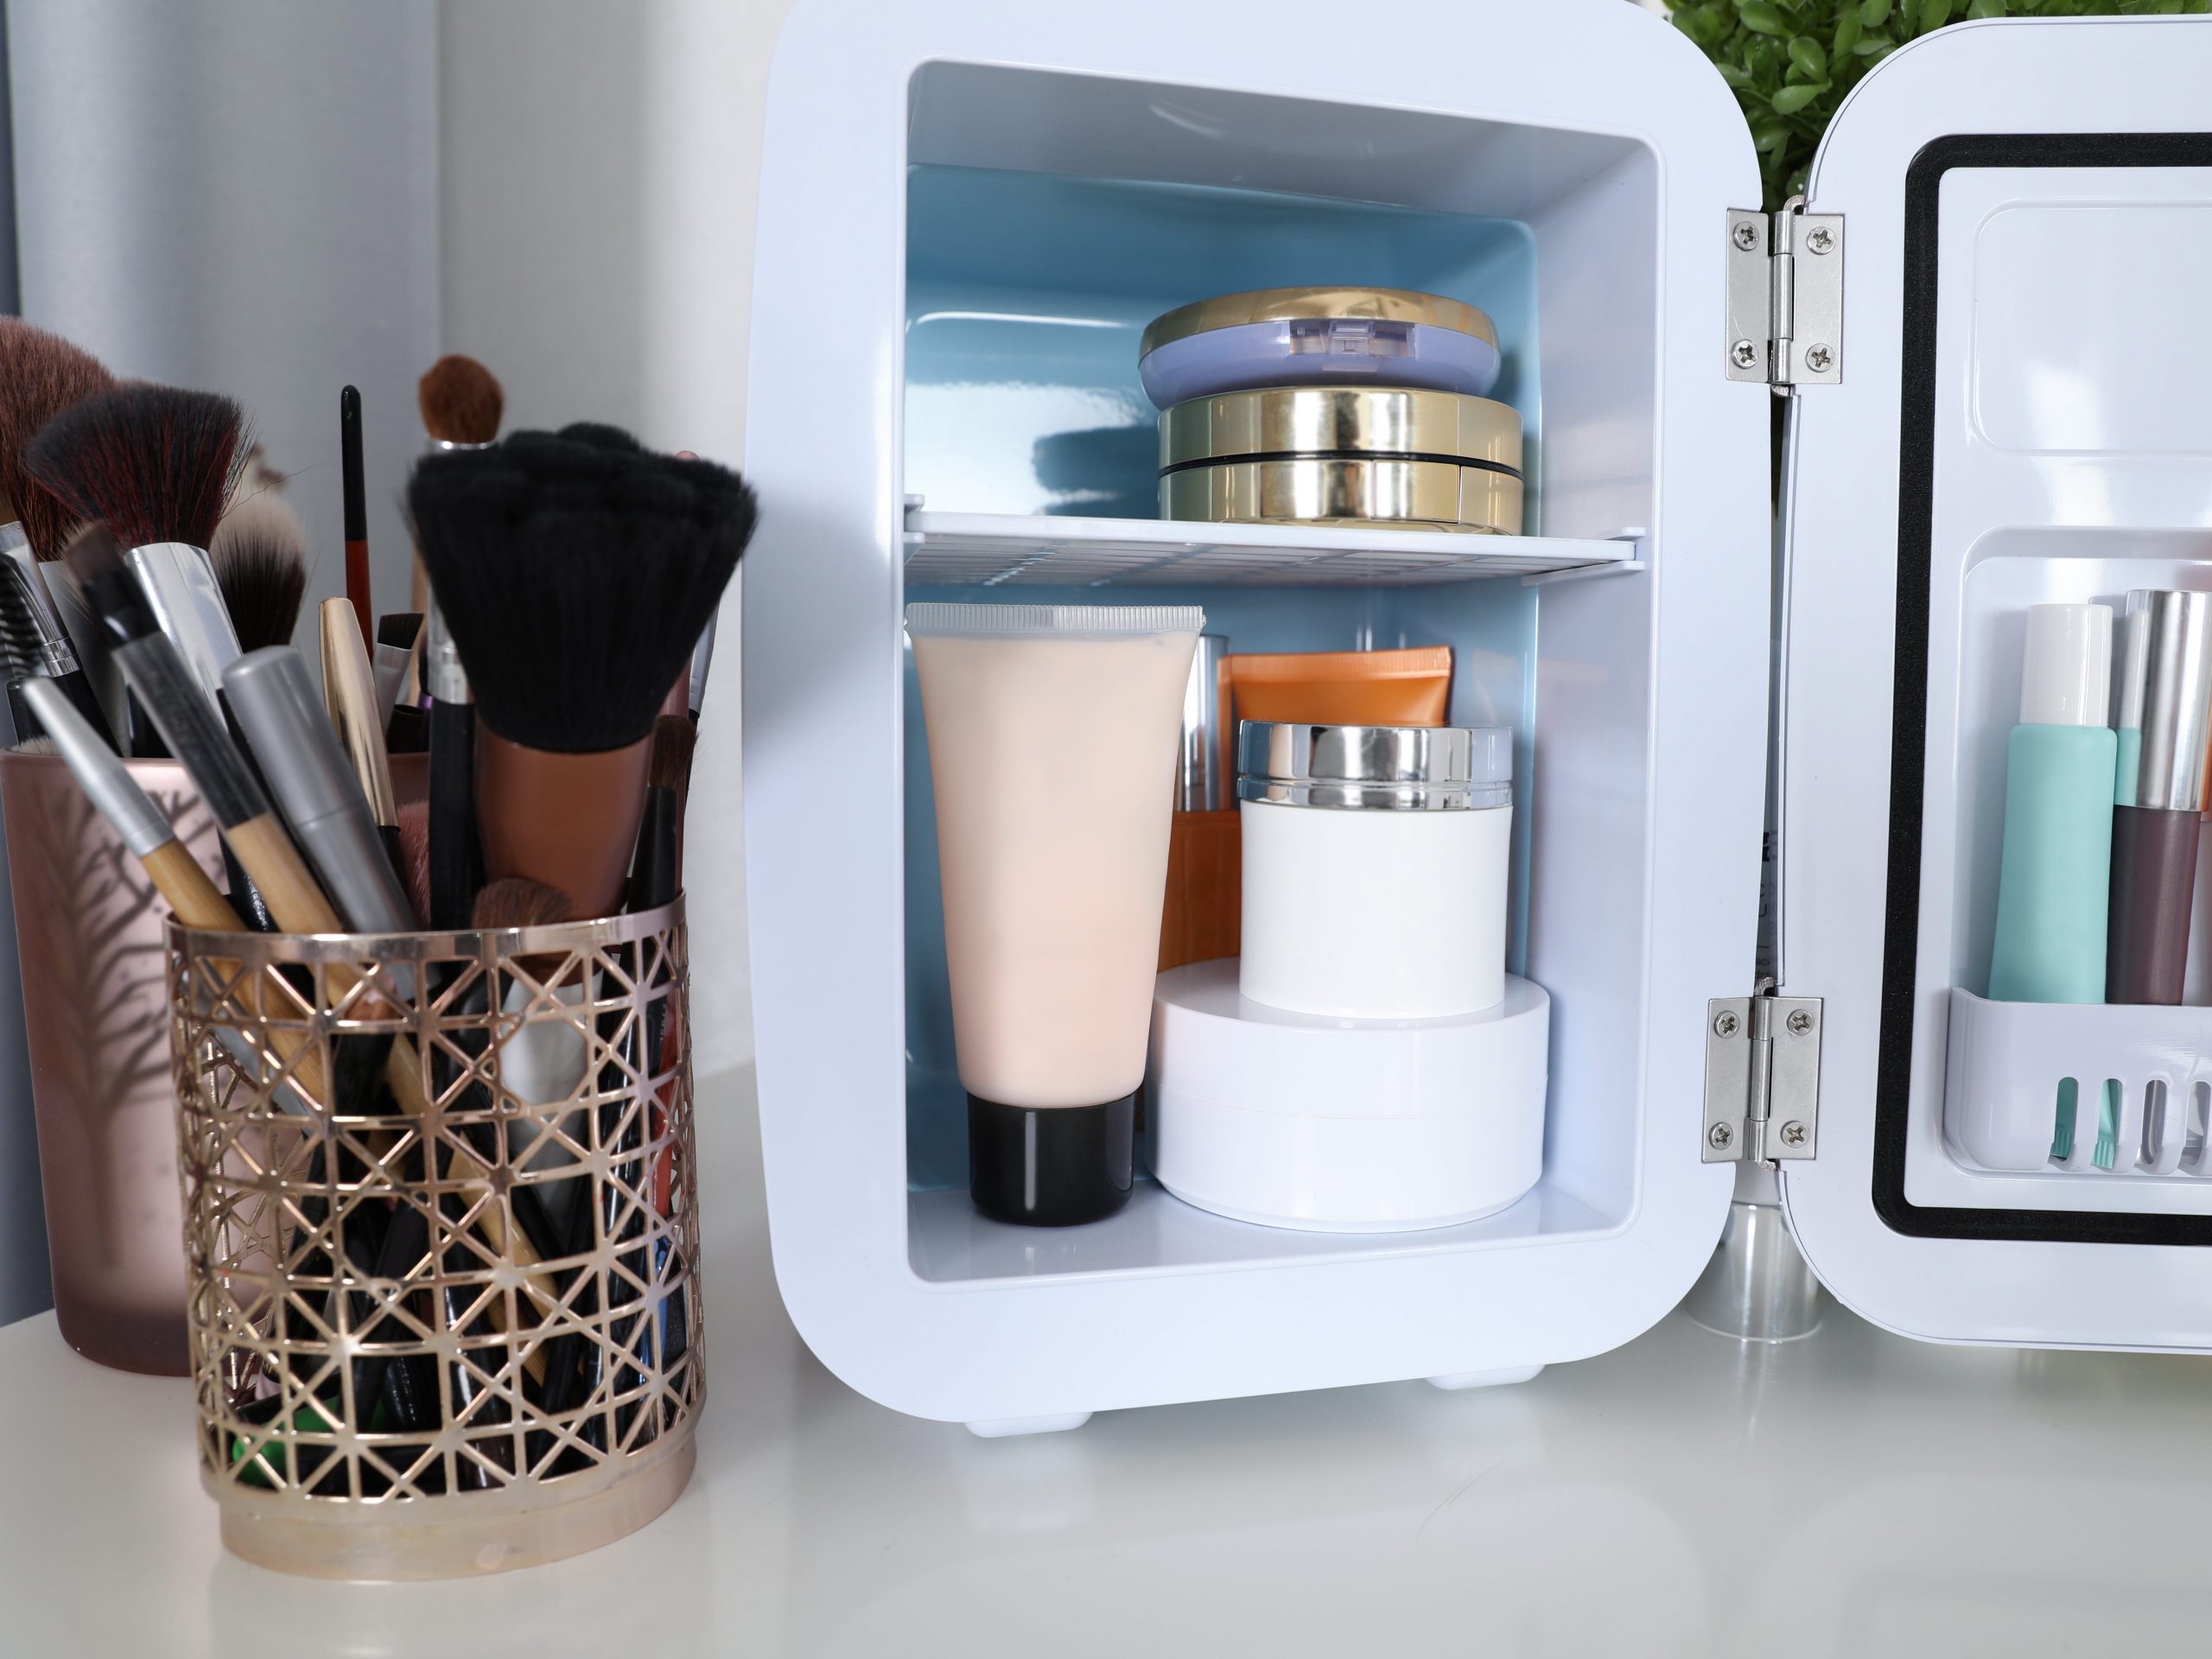 cosmetics in a mini fridge